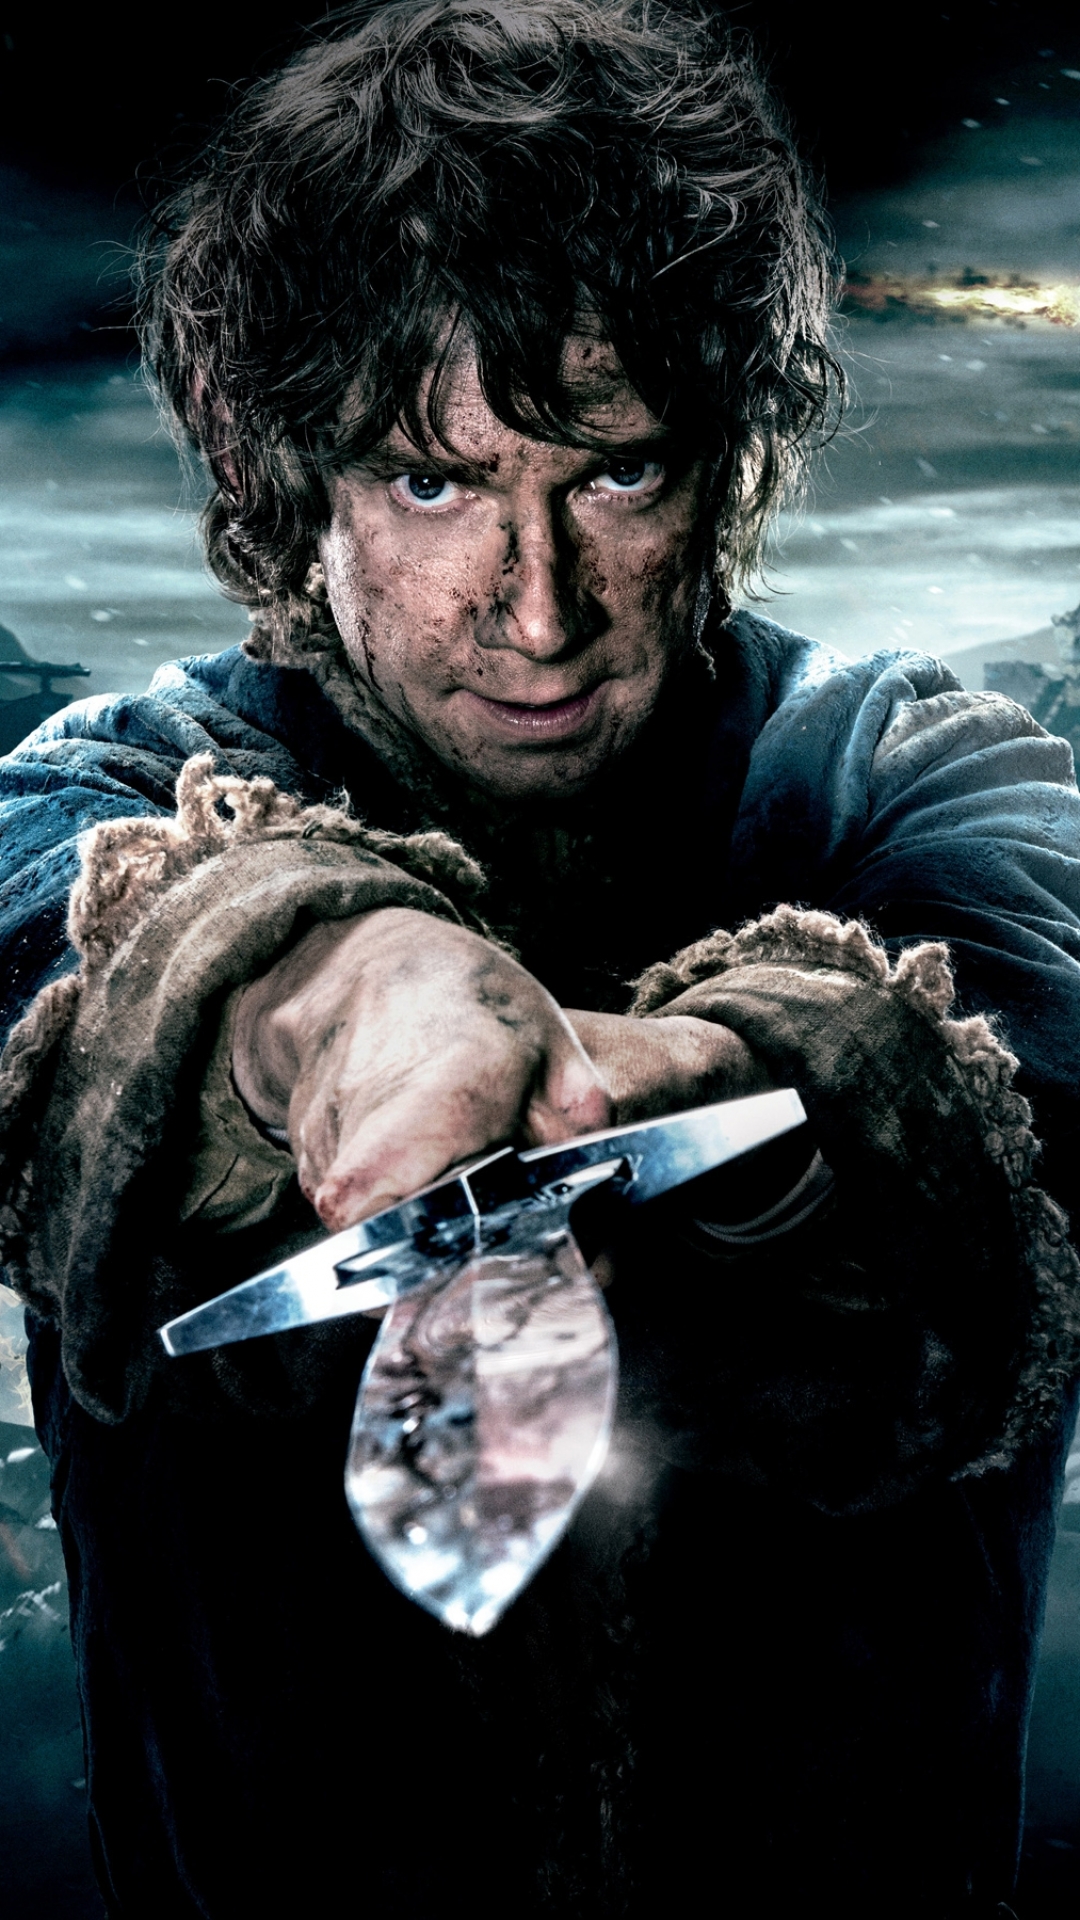 32k Wallpaper The Hobbit: The Battle Of The Five Armies 